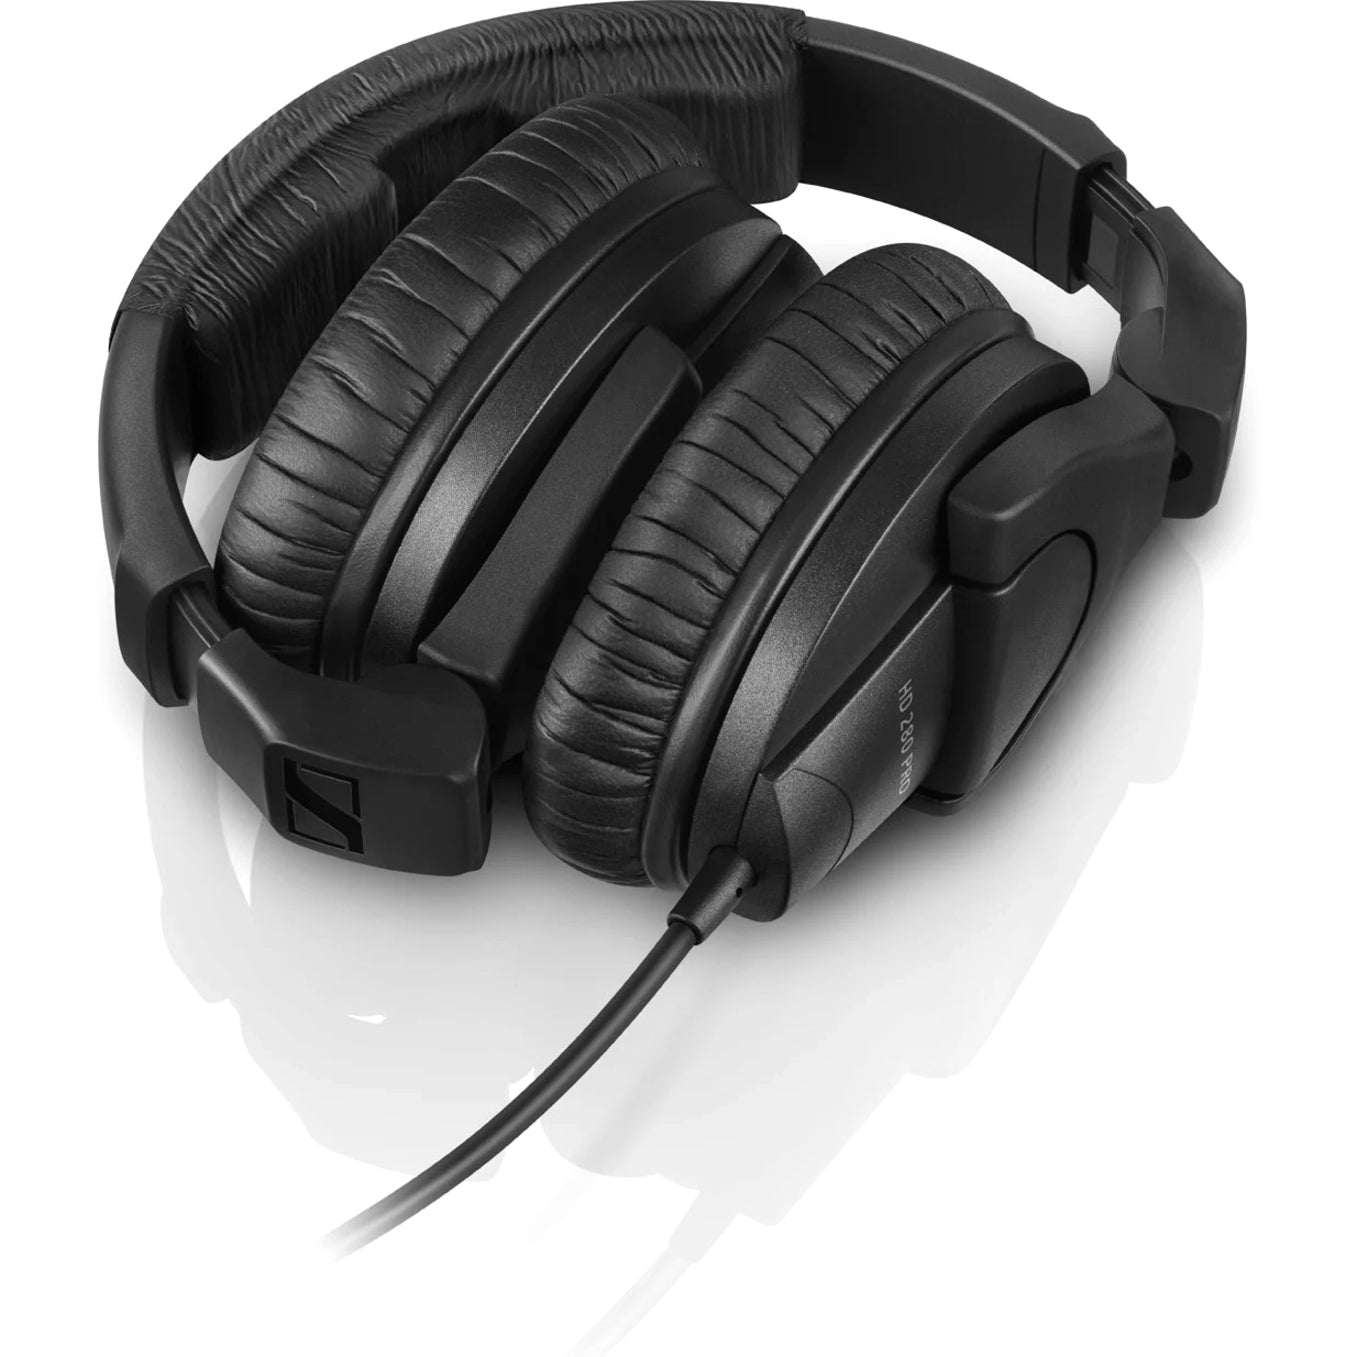 Sennheiser HD 280 PRO Professional Monitoring Headphone